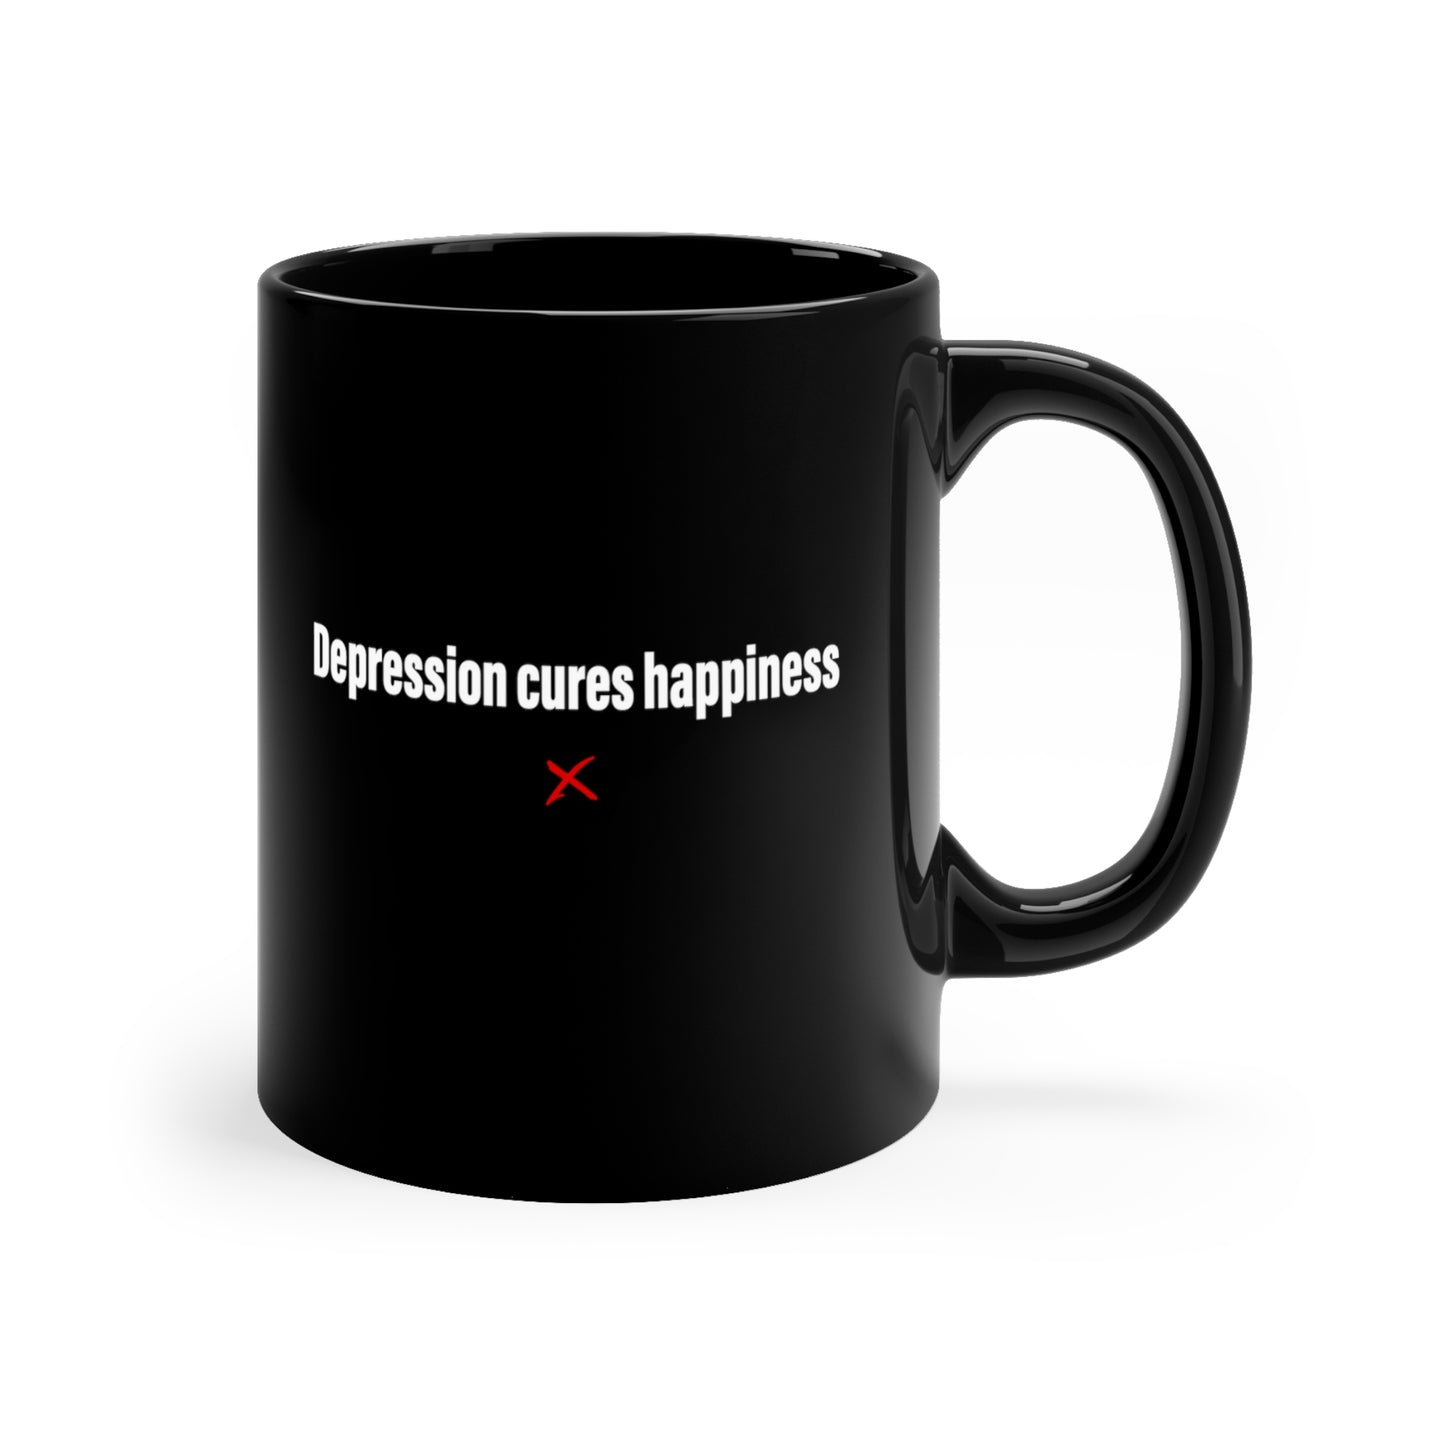 Depression cures happiness - Mug